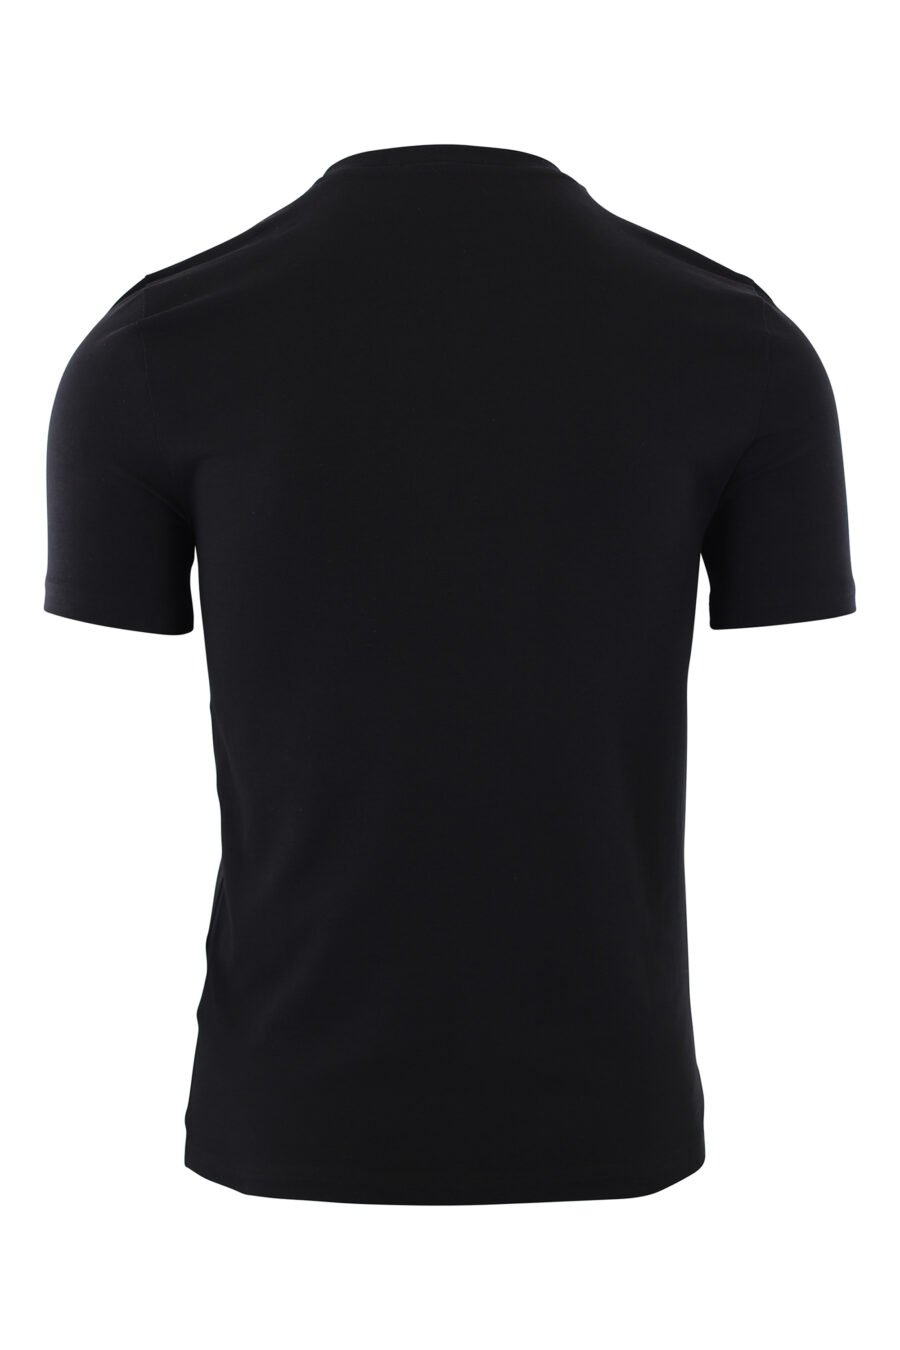 T-shirt noir avec double logo "smiley" - IMG 2426